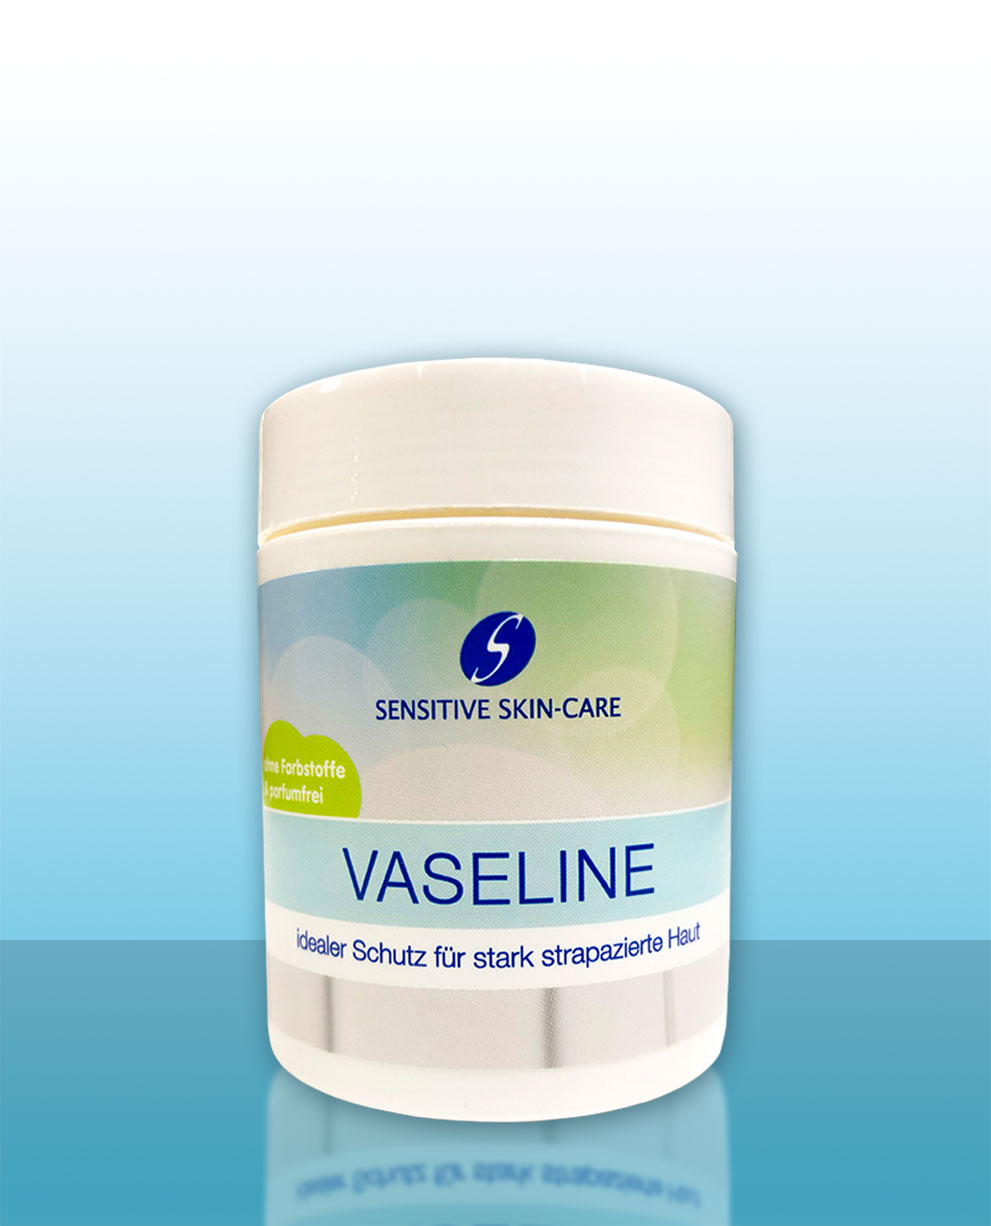 Vertrek naar voorraad geld Vaseline ongeparfumeerd - 125 ml, Skin-Care - Baking Soda NL